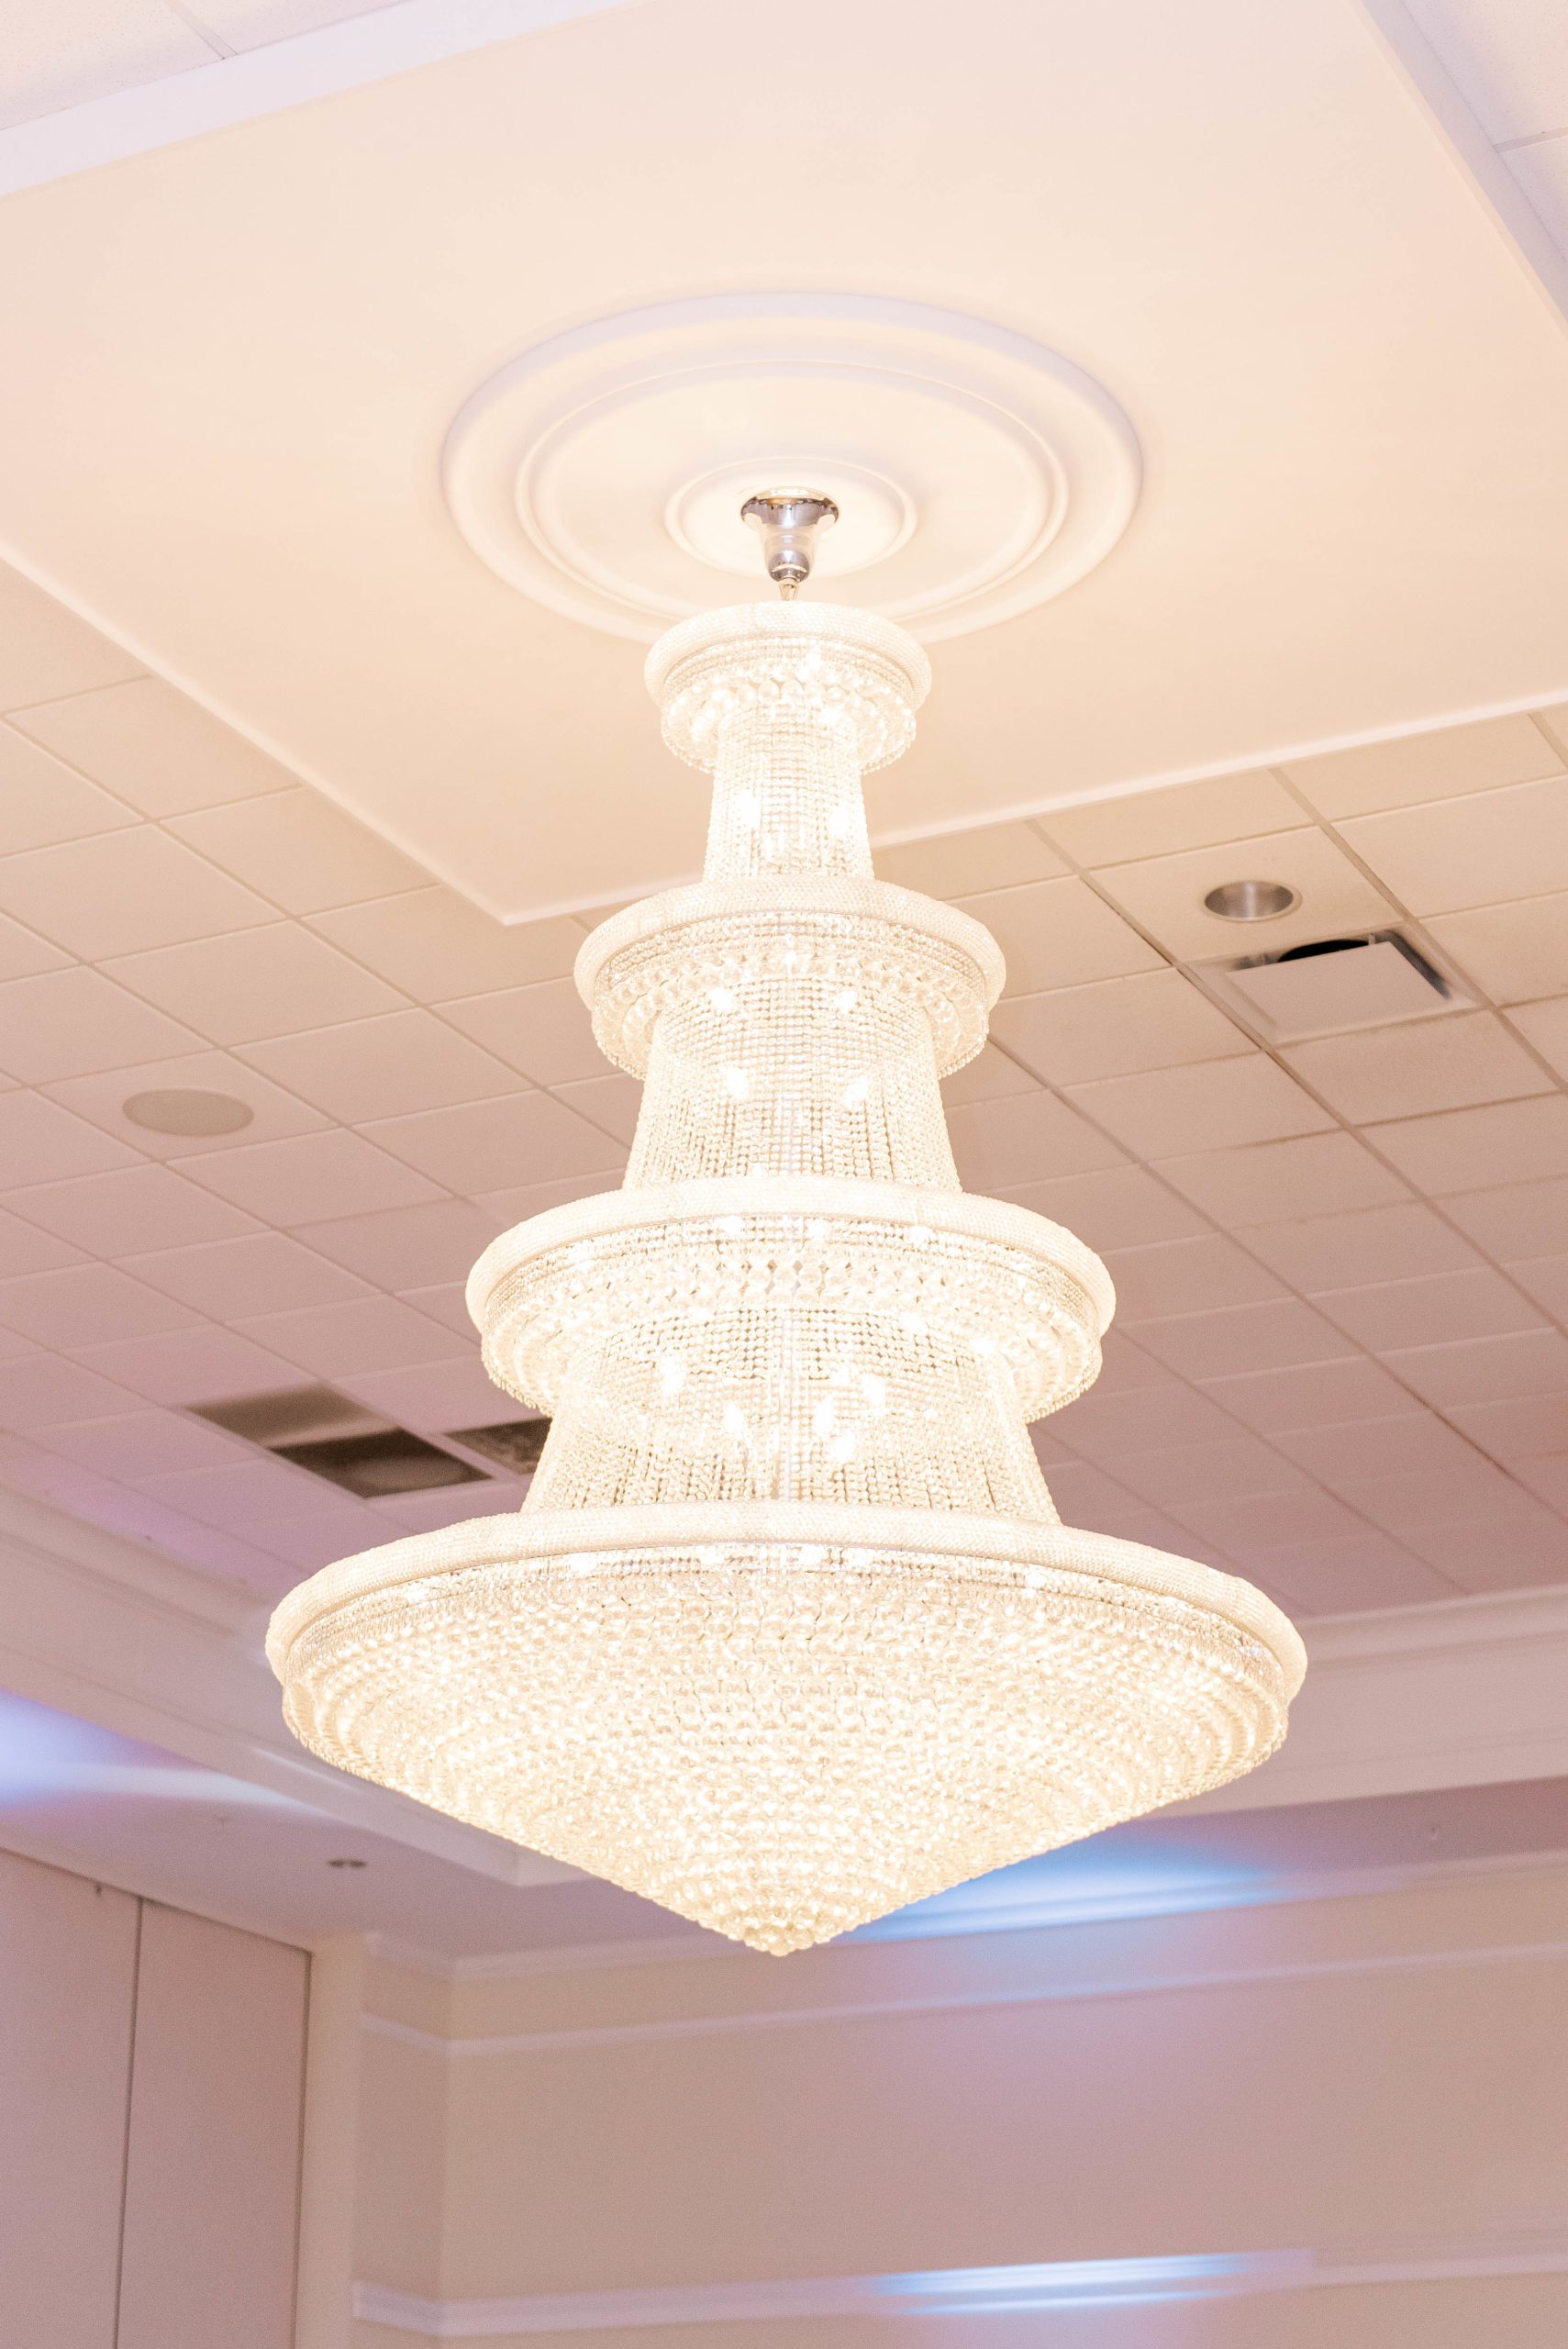 The regent wedding reception chandelier